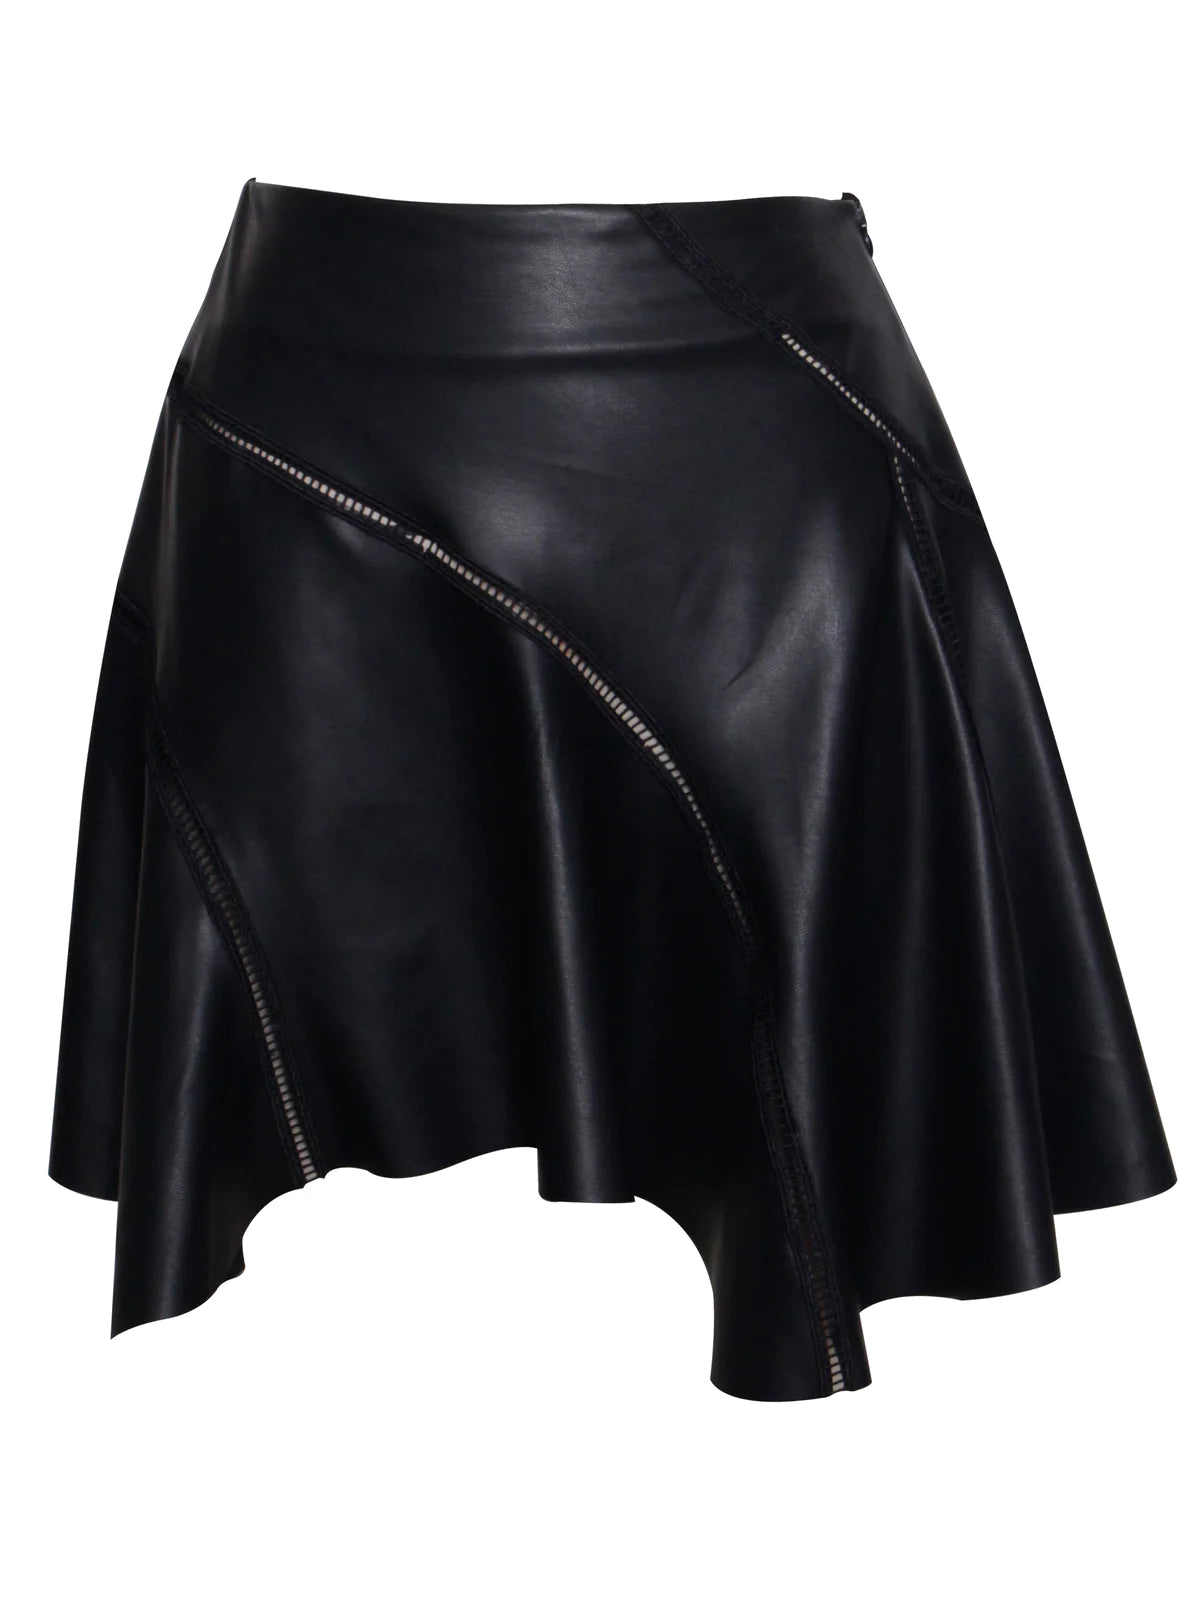 Bella Skirt